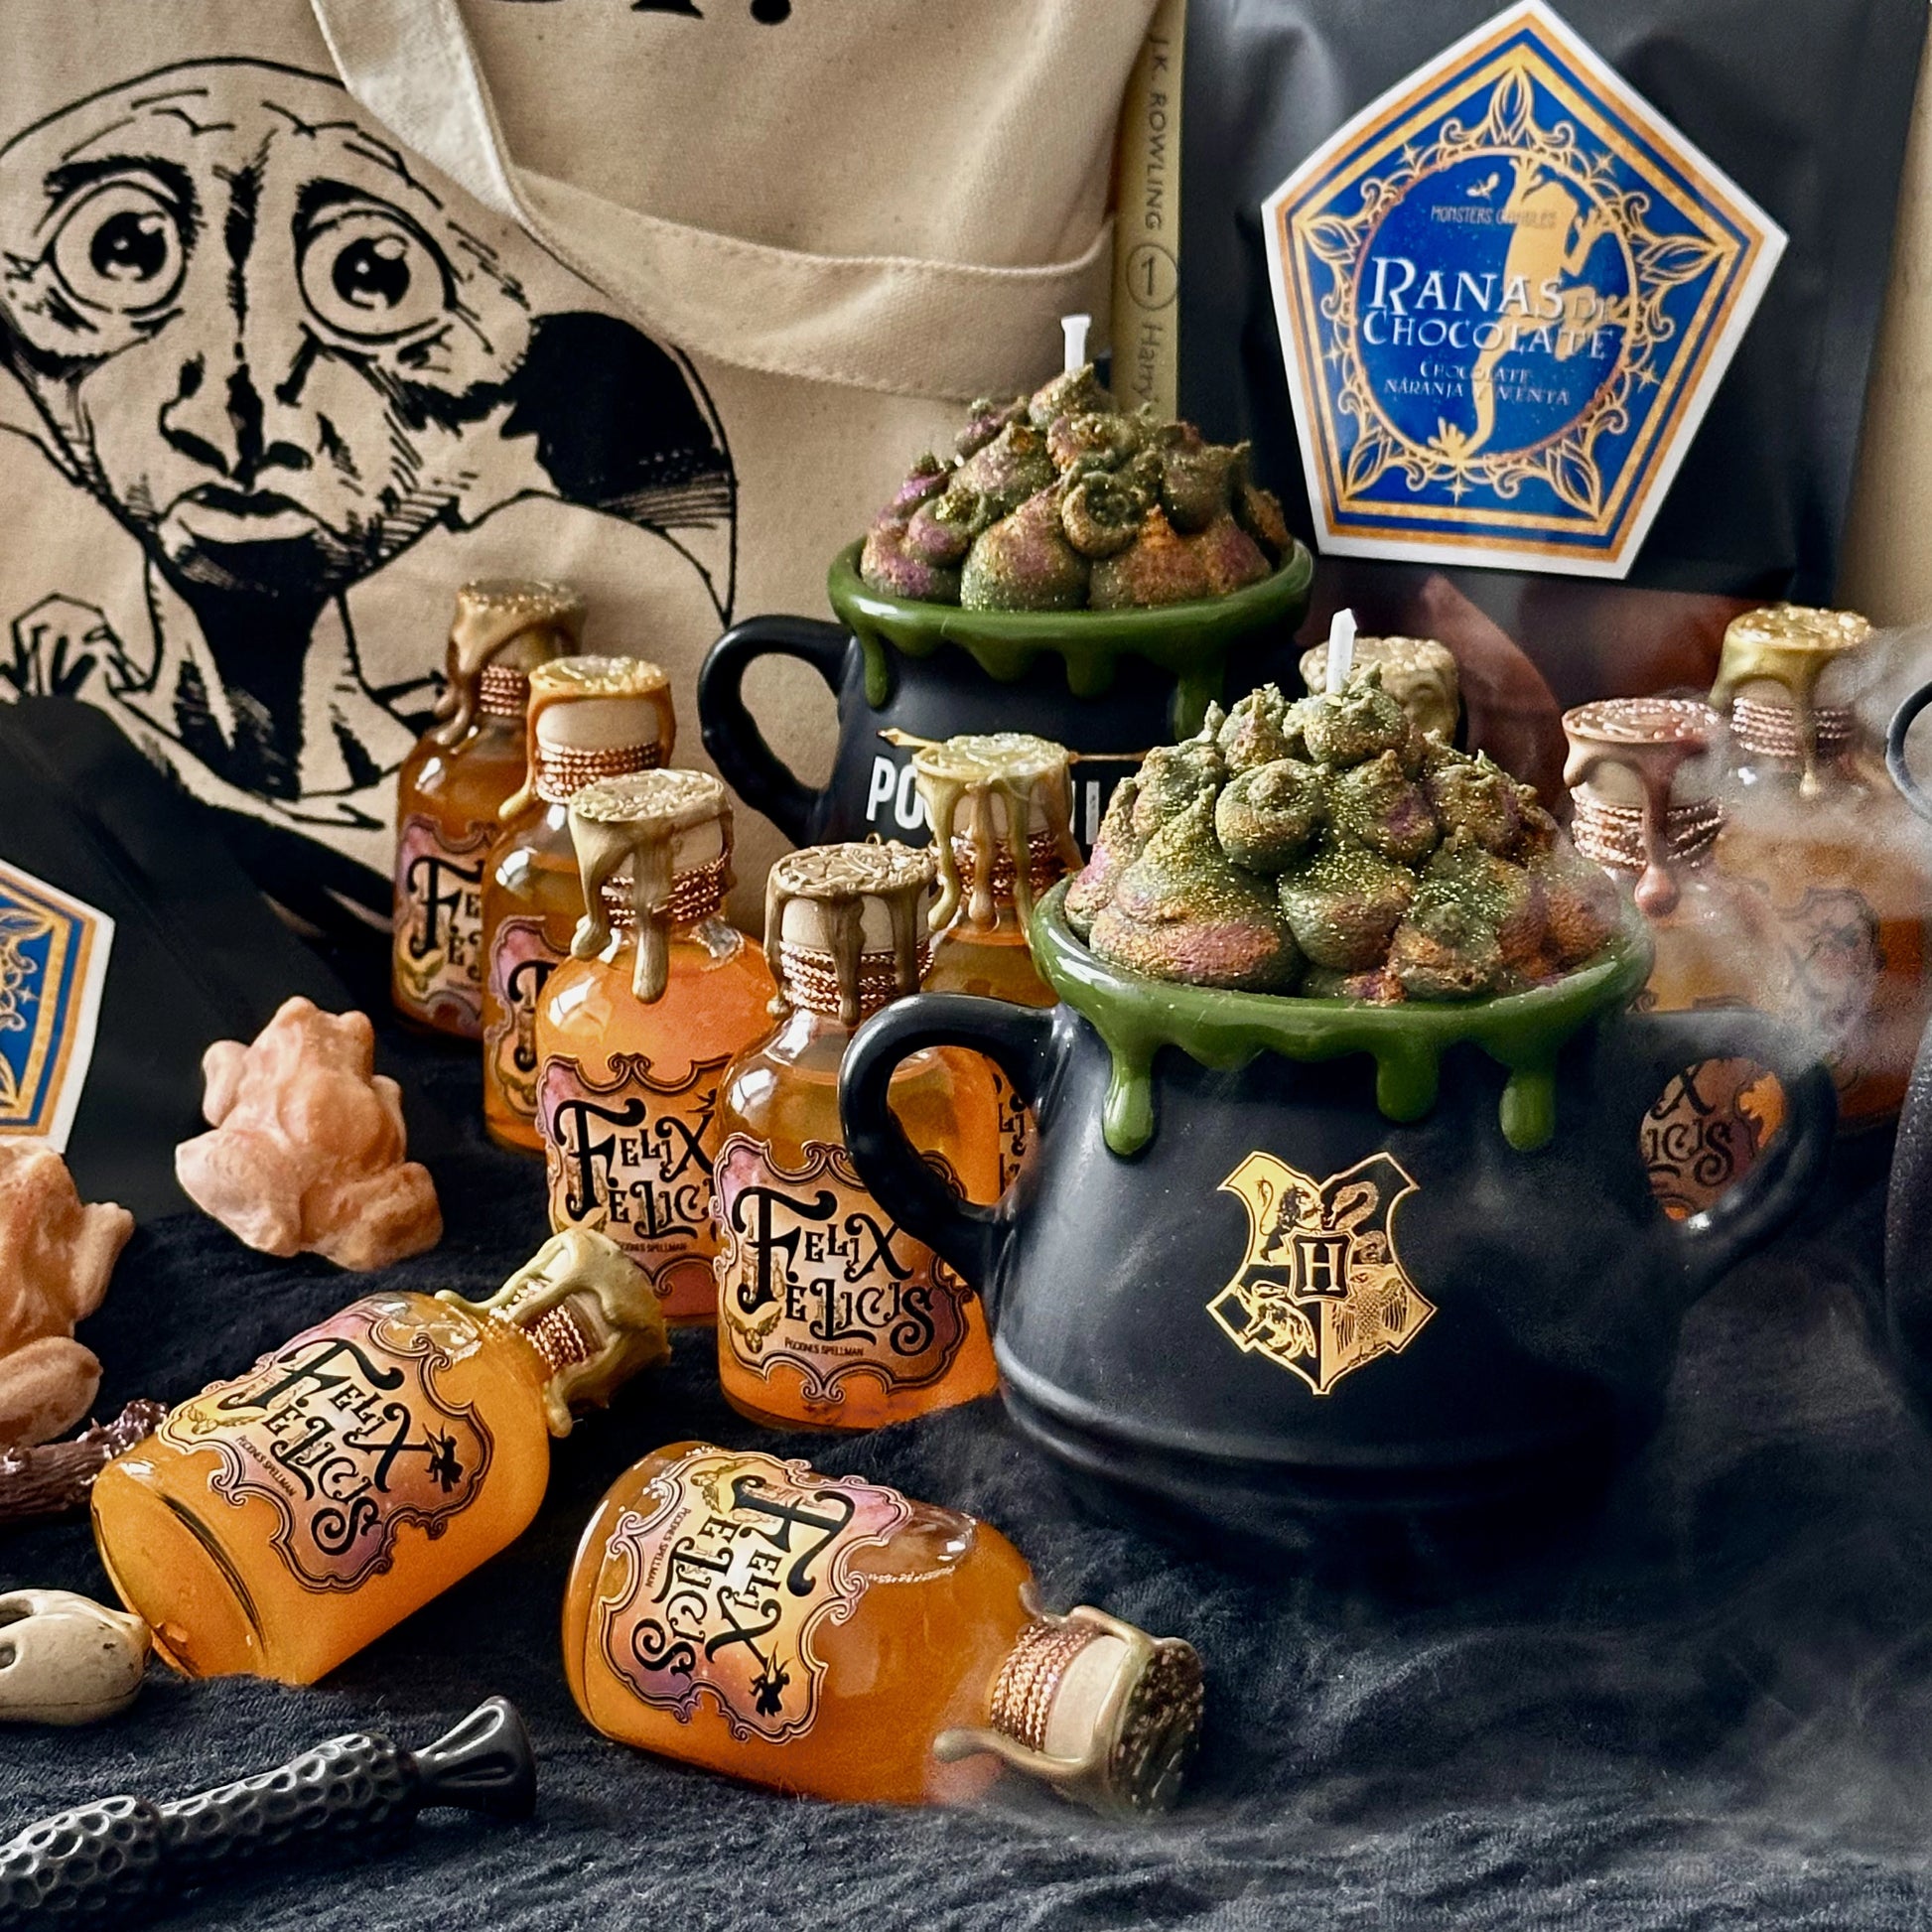 Taza mágica cerámica personalizada Harry Potter 01